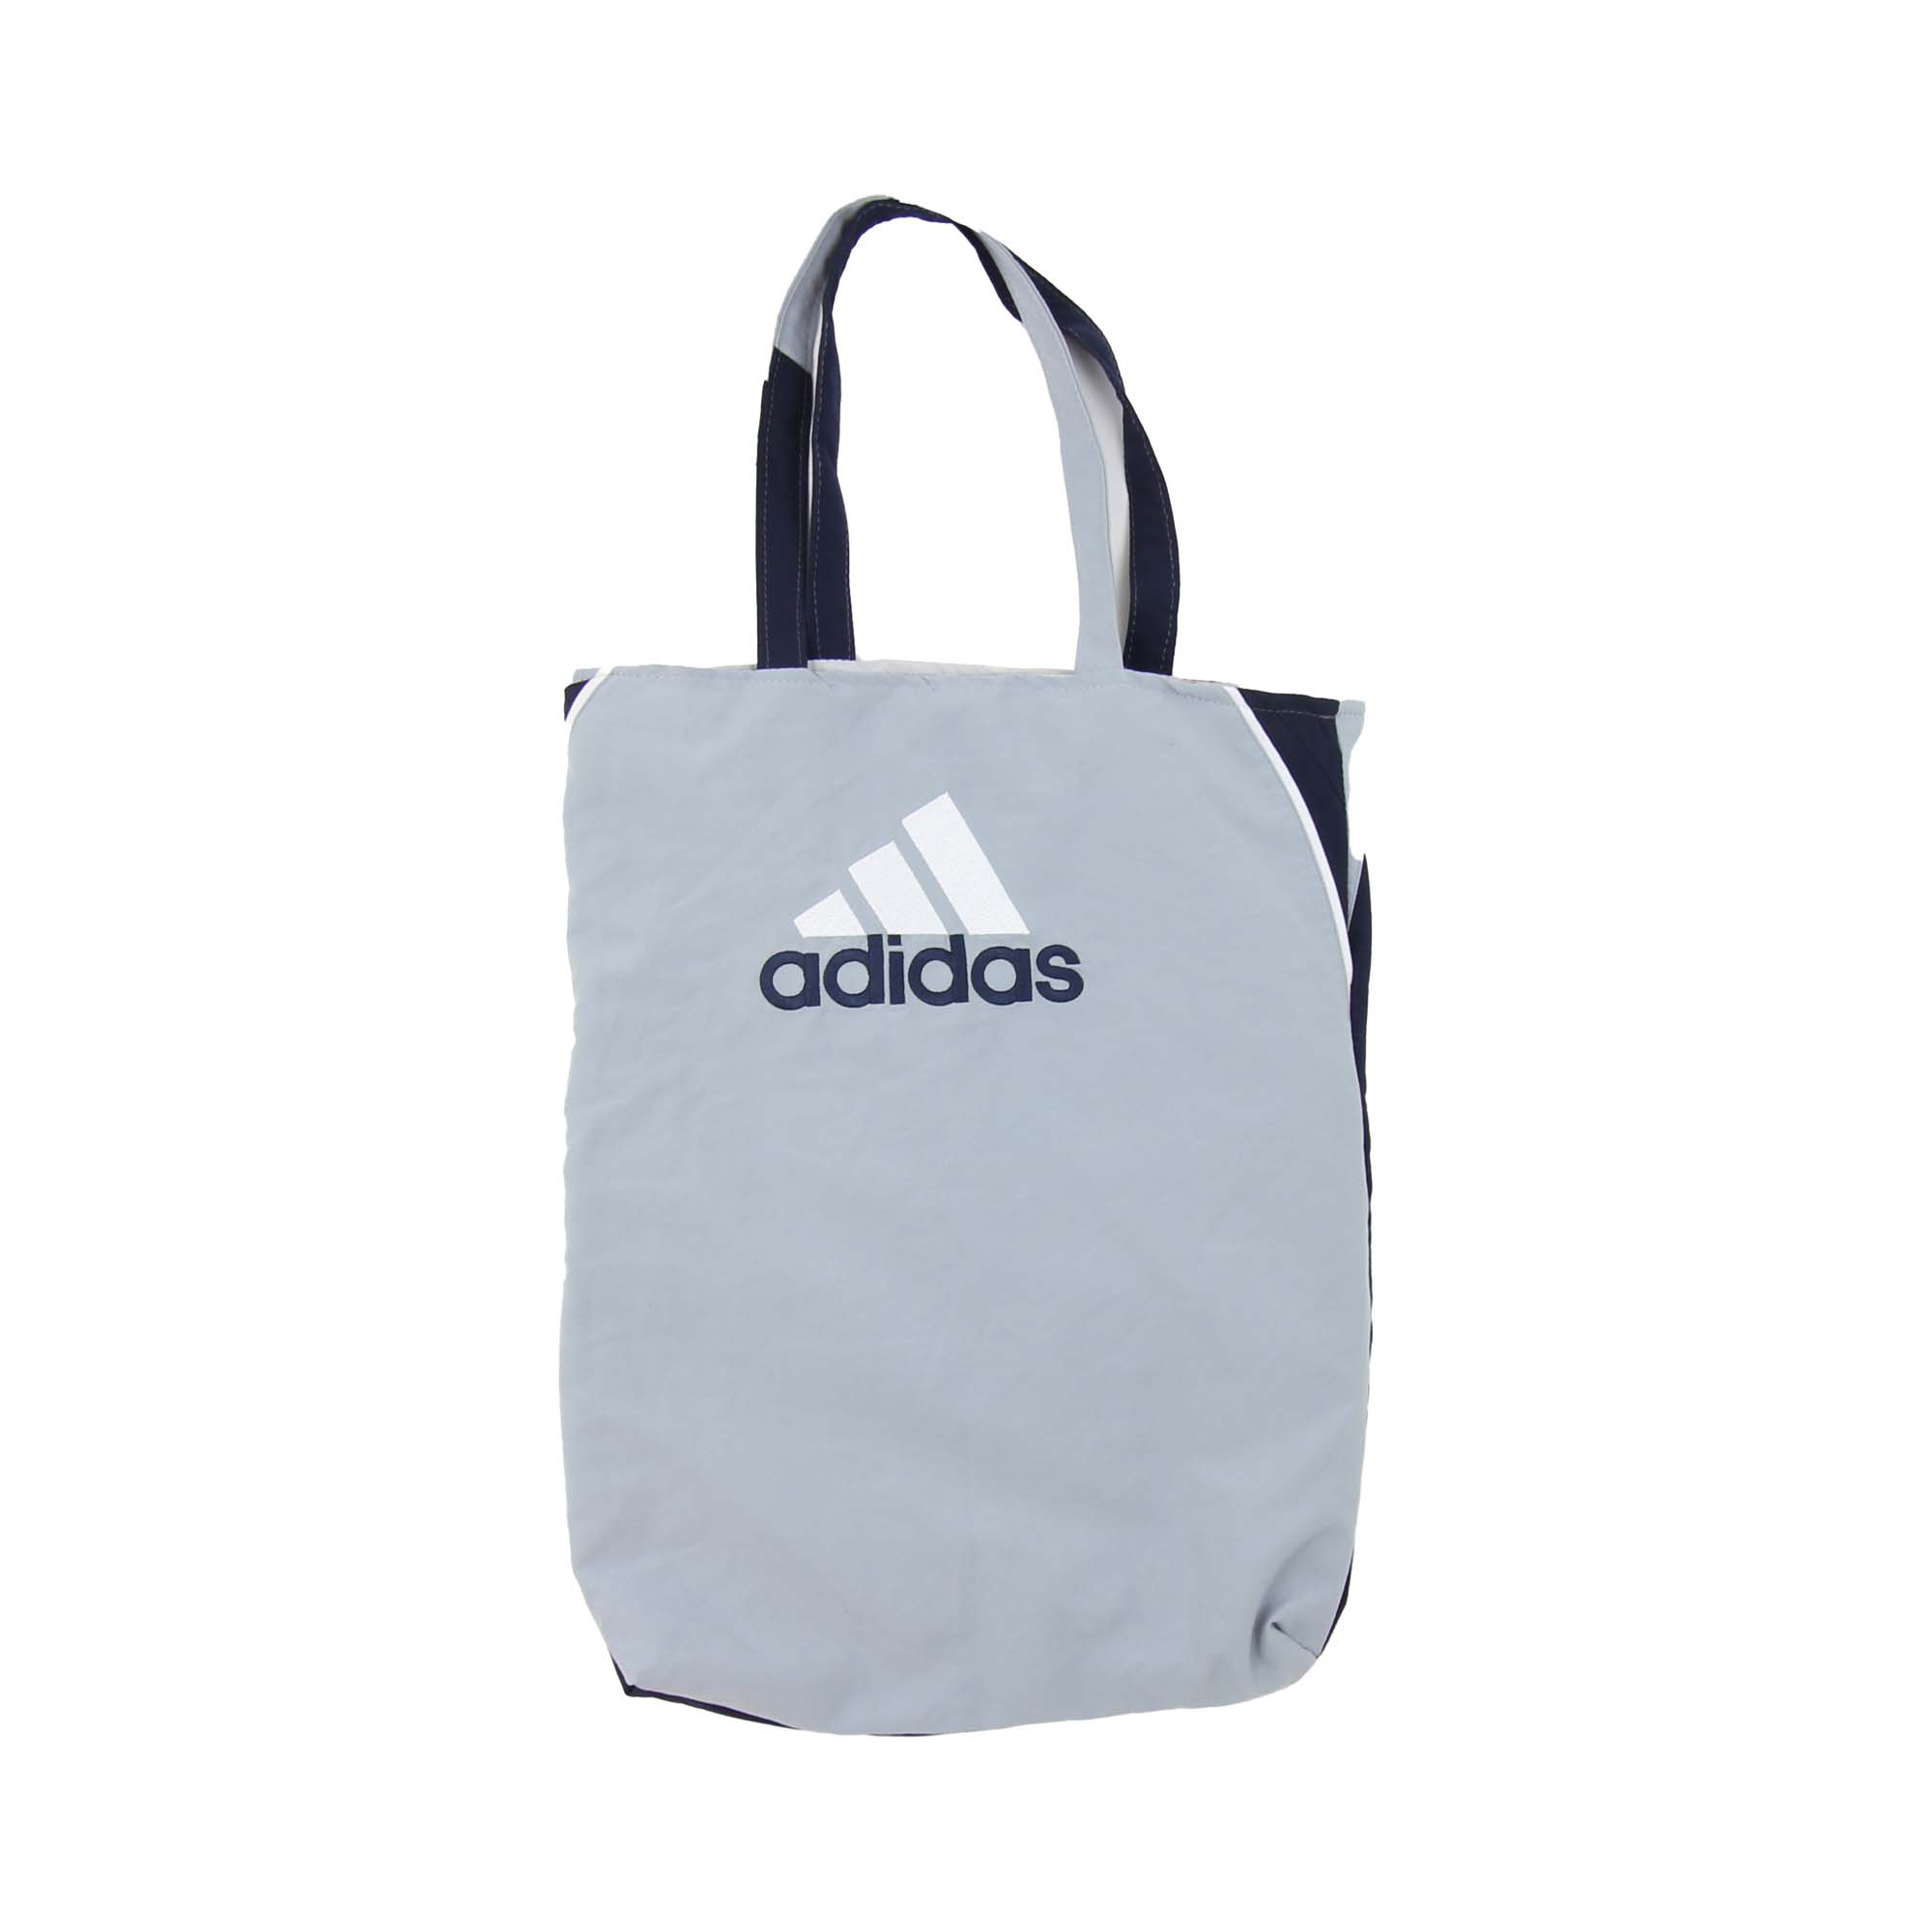 Adidas Rework Bag  